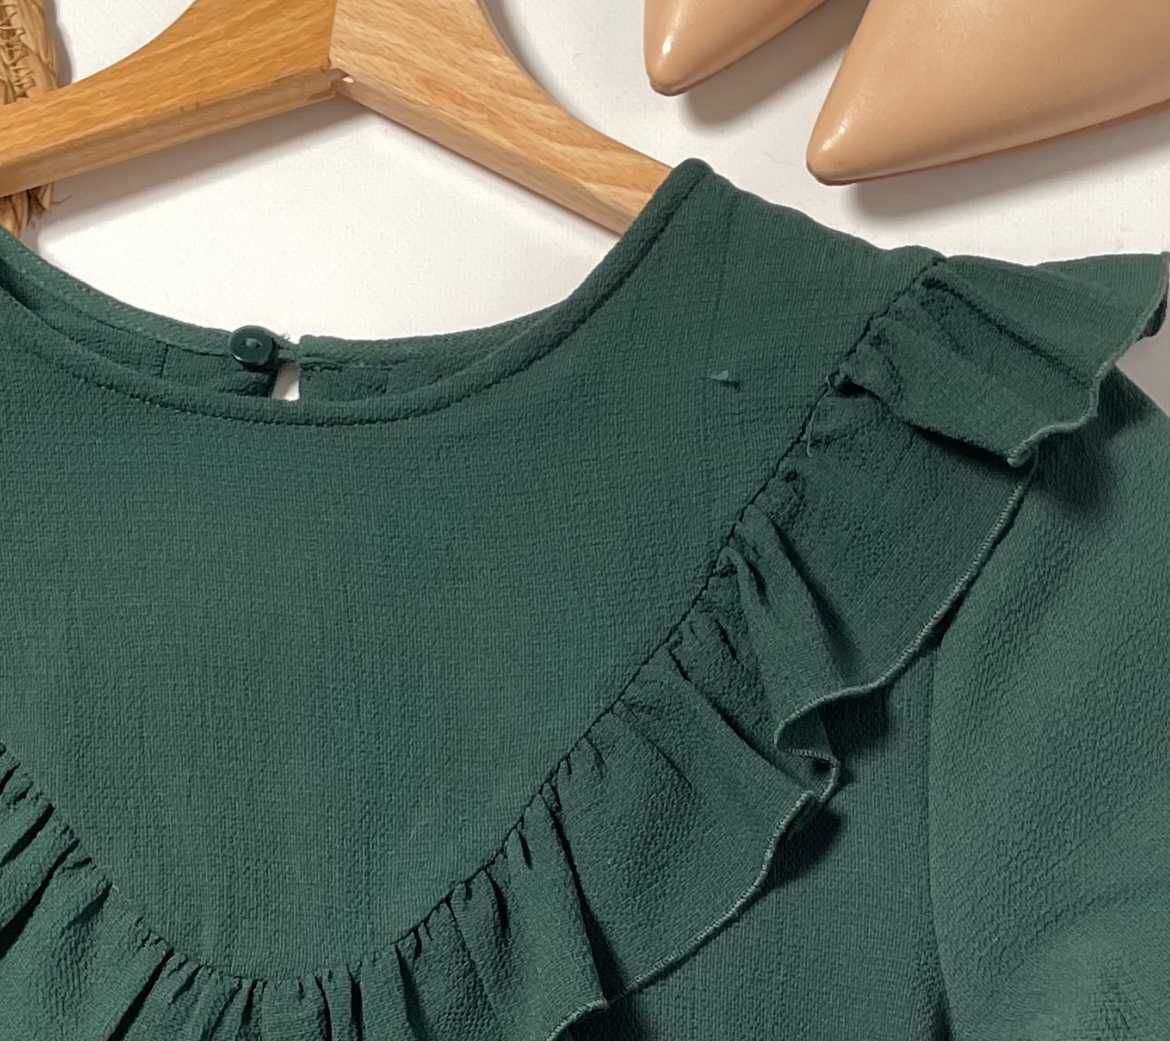 Damska zielona sukienka z falbanami H&M M(38)